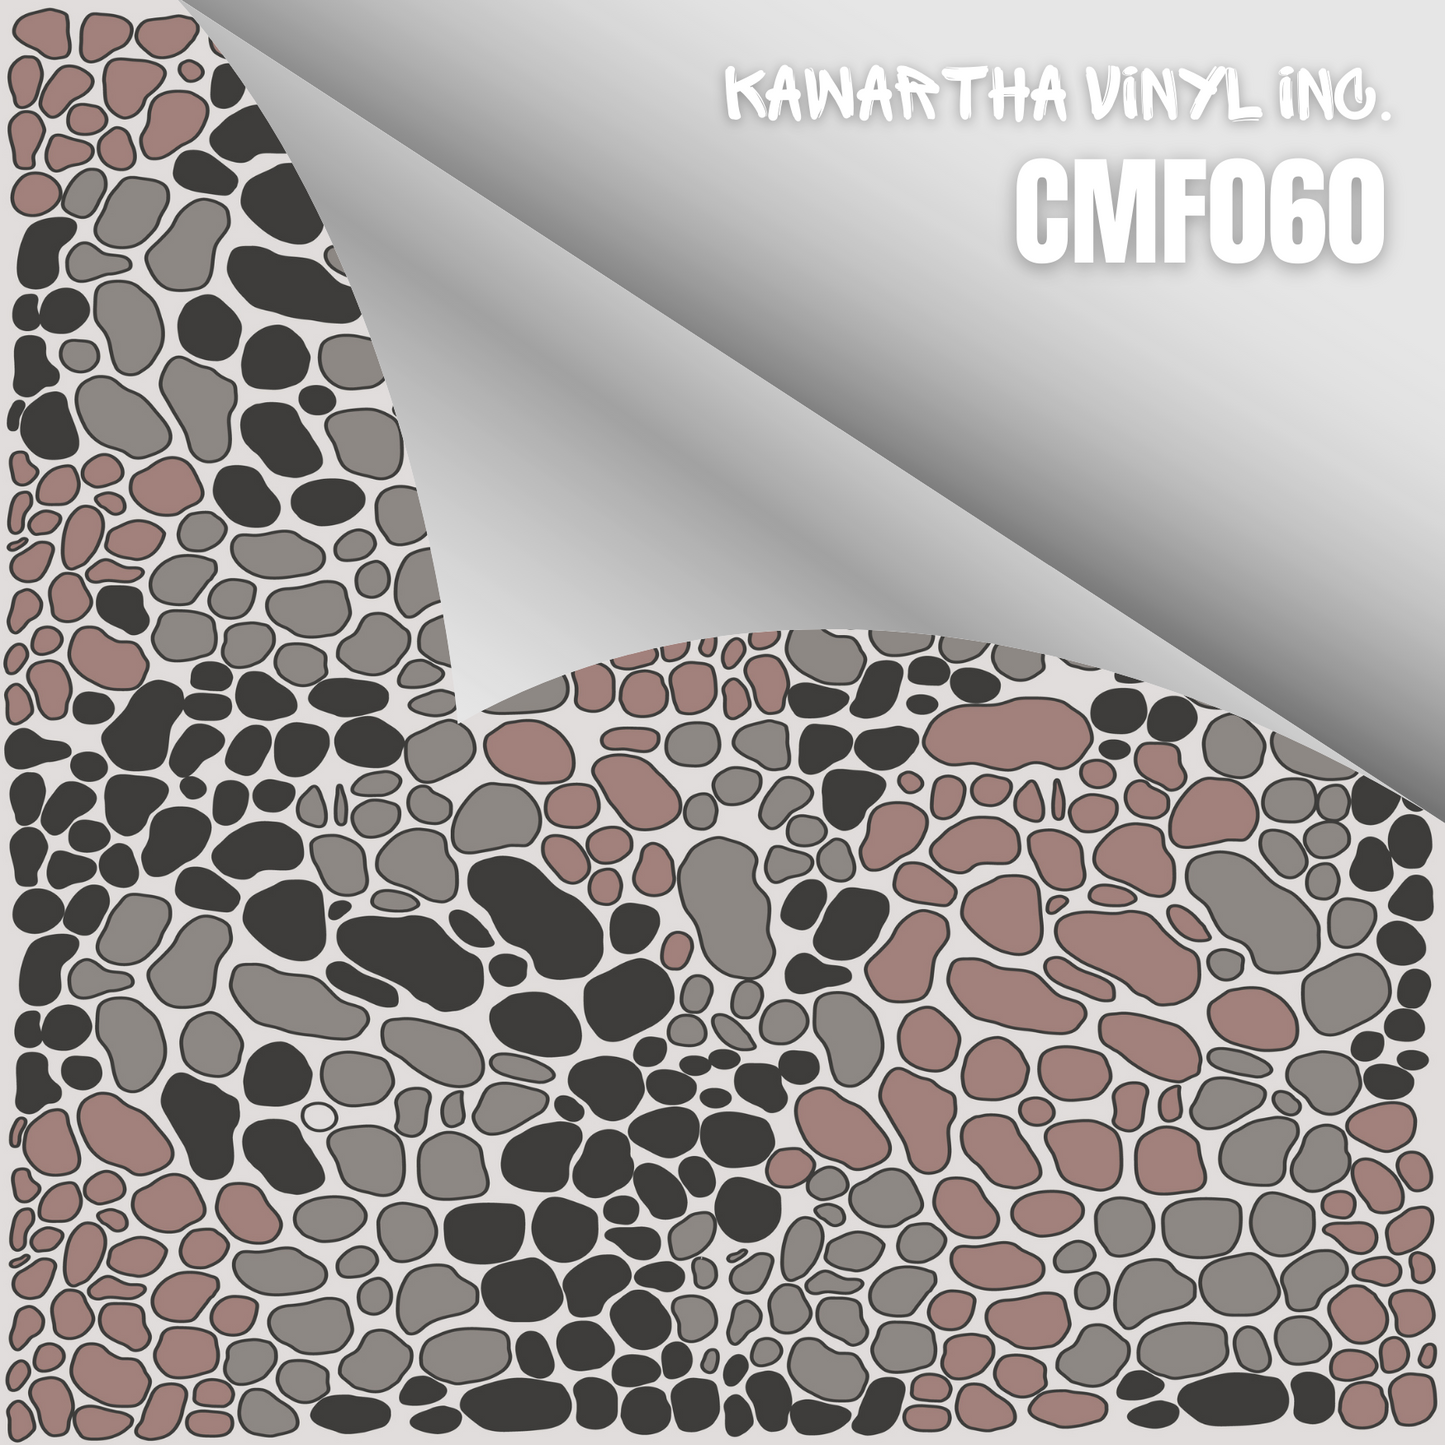 CMF060 Adhesive & HTV Patterns